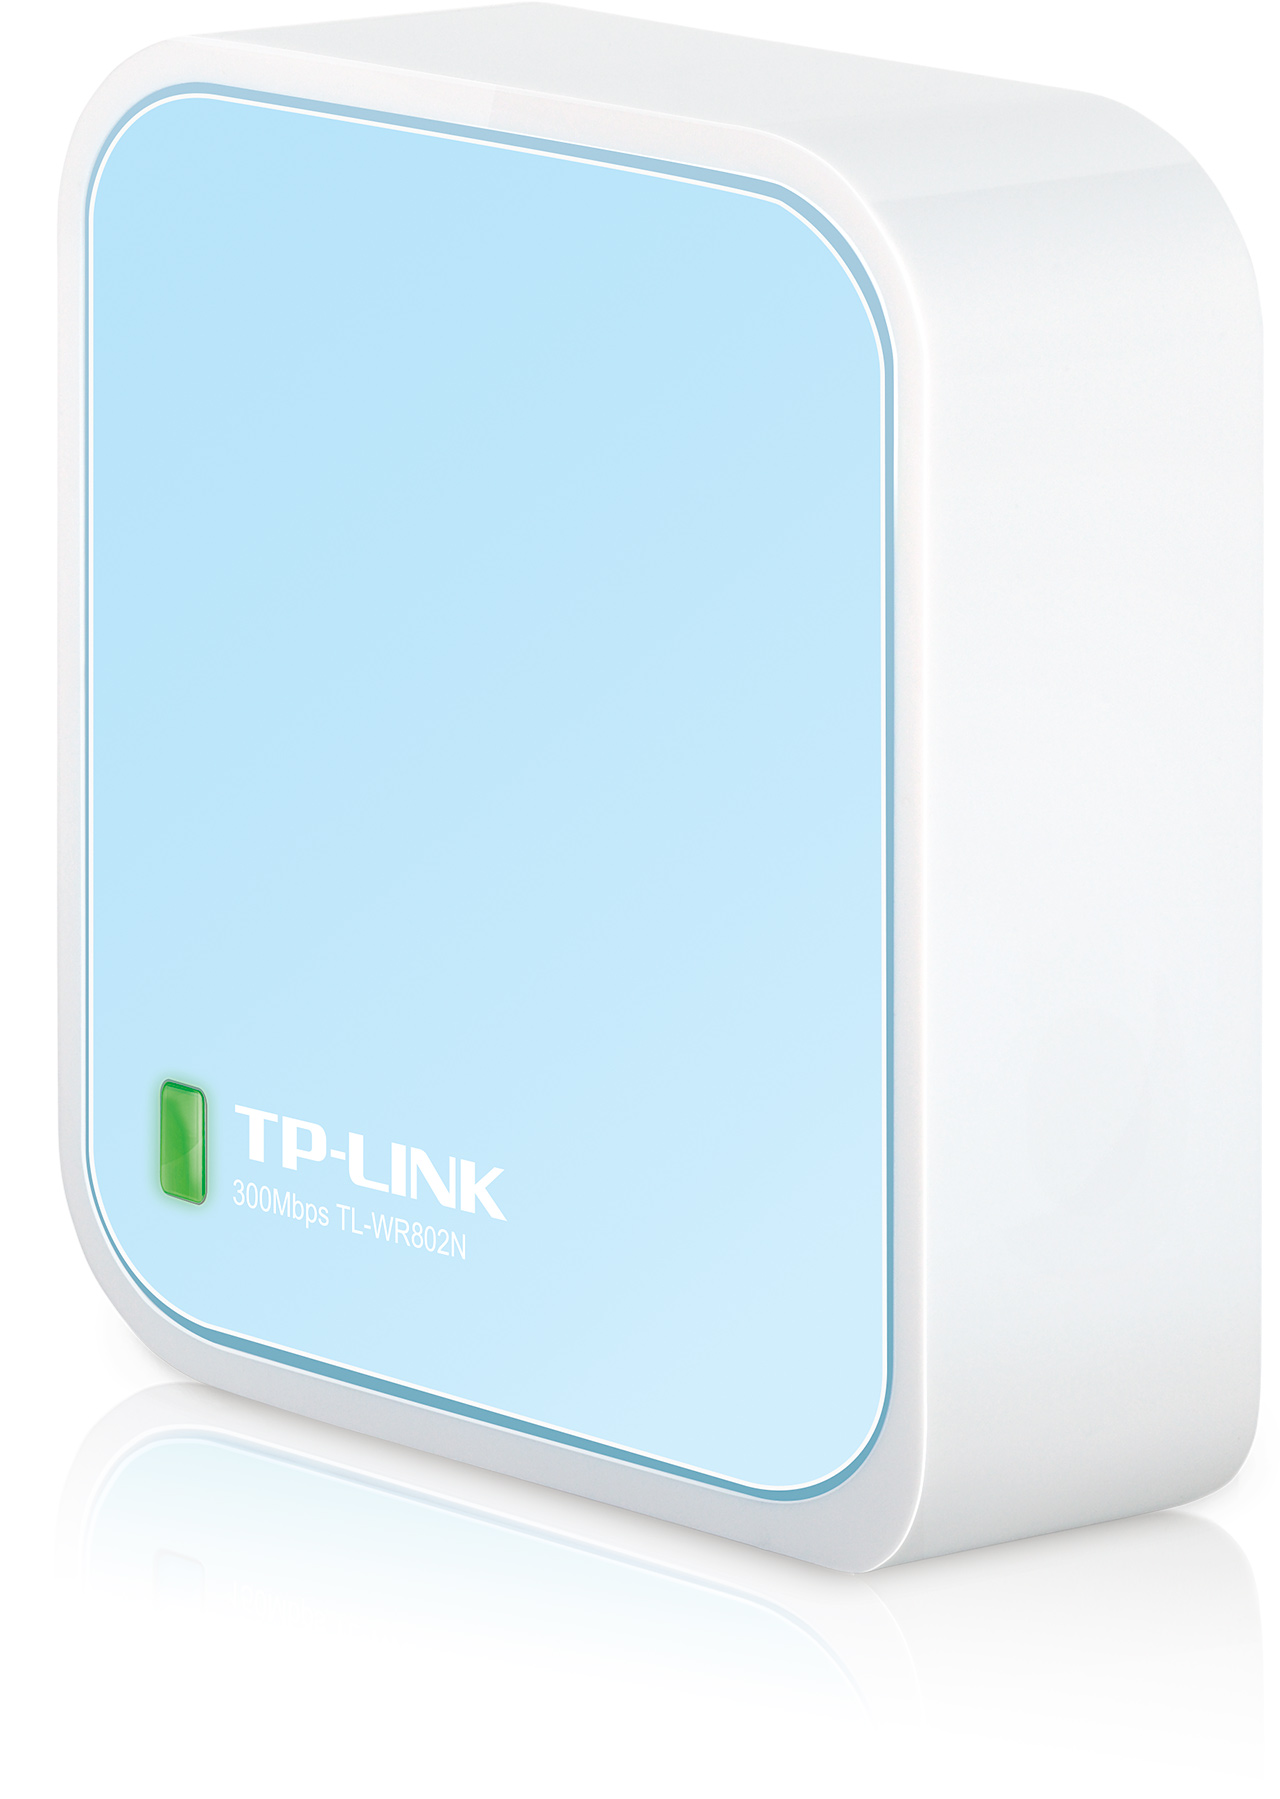 Obrázek TP-LINK TL-WR802N N300 Nano Router/AP/extender/Client/Hotspot,1xRJ45, 1x Micro USB